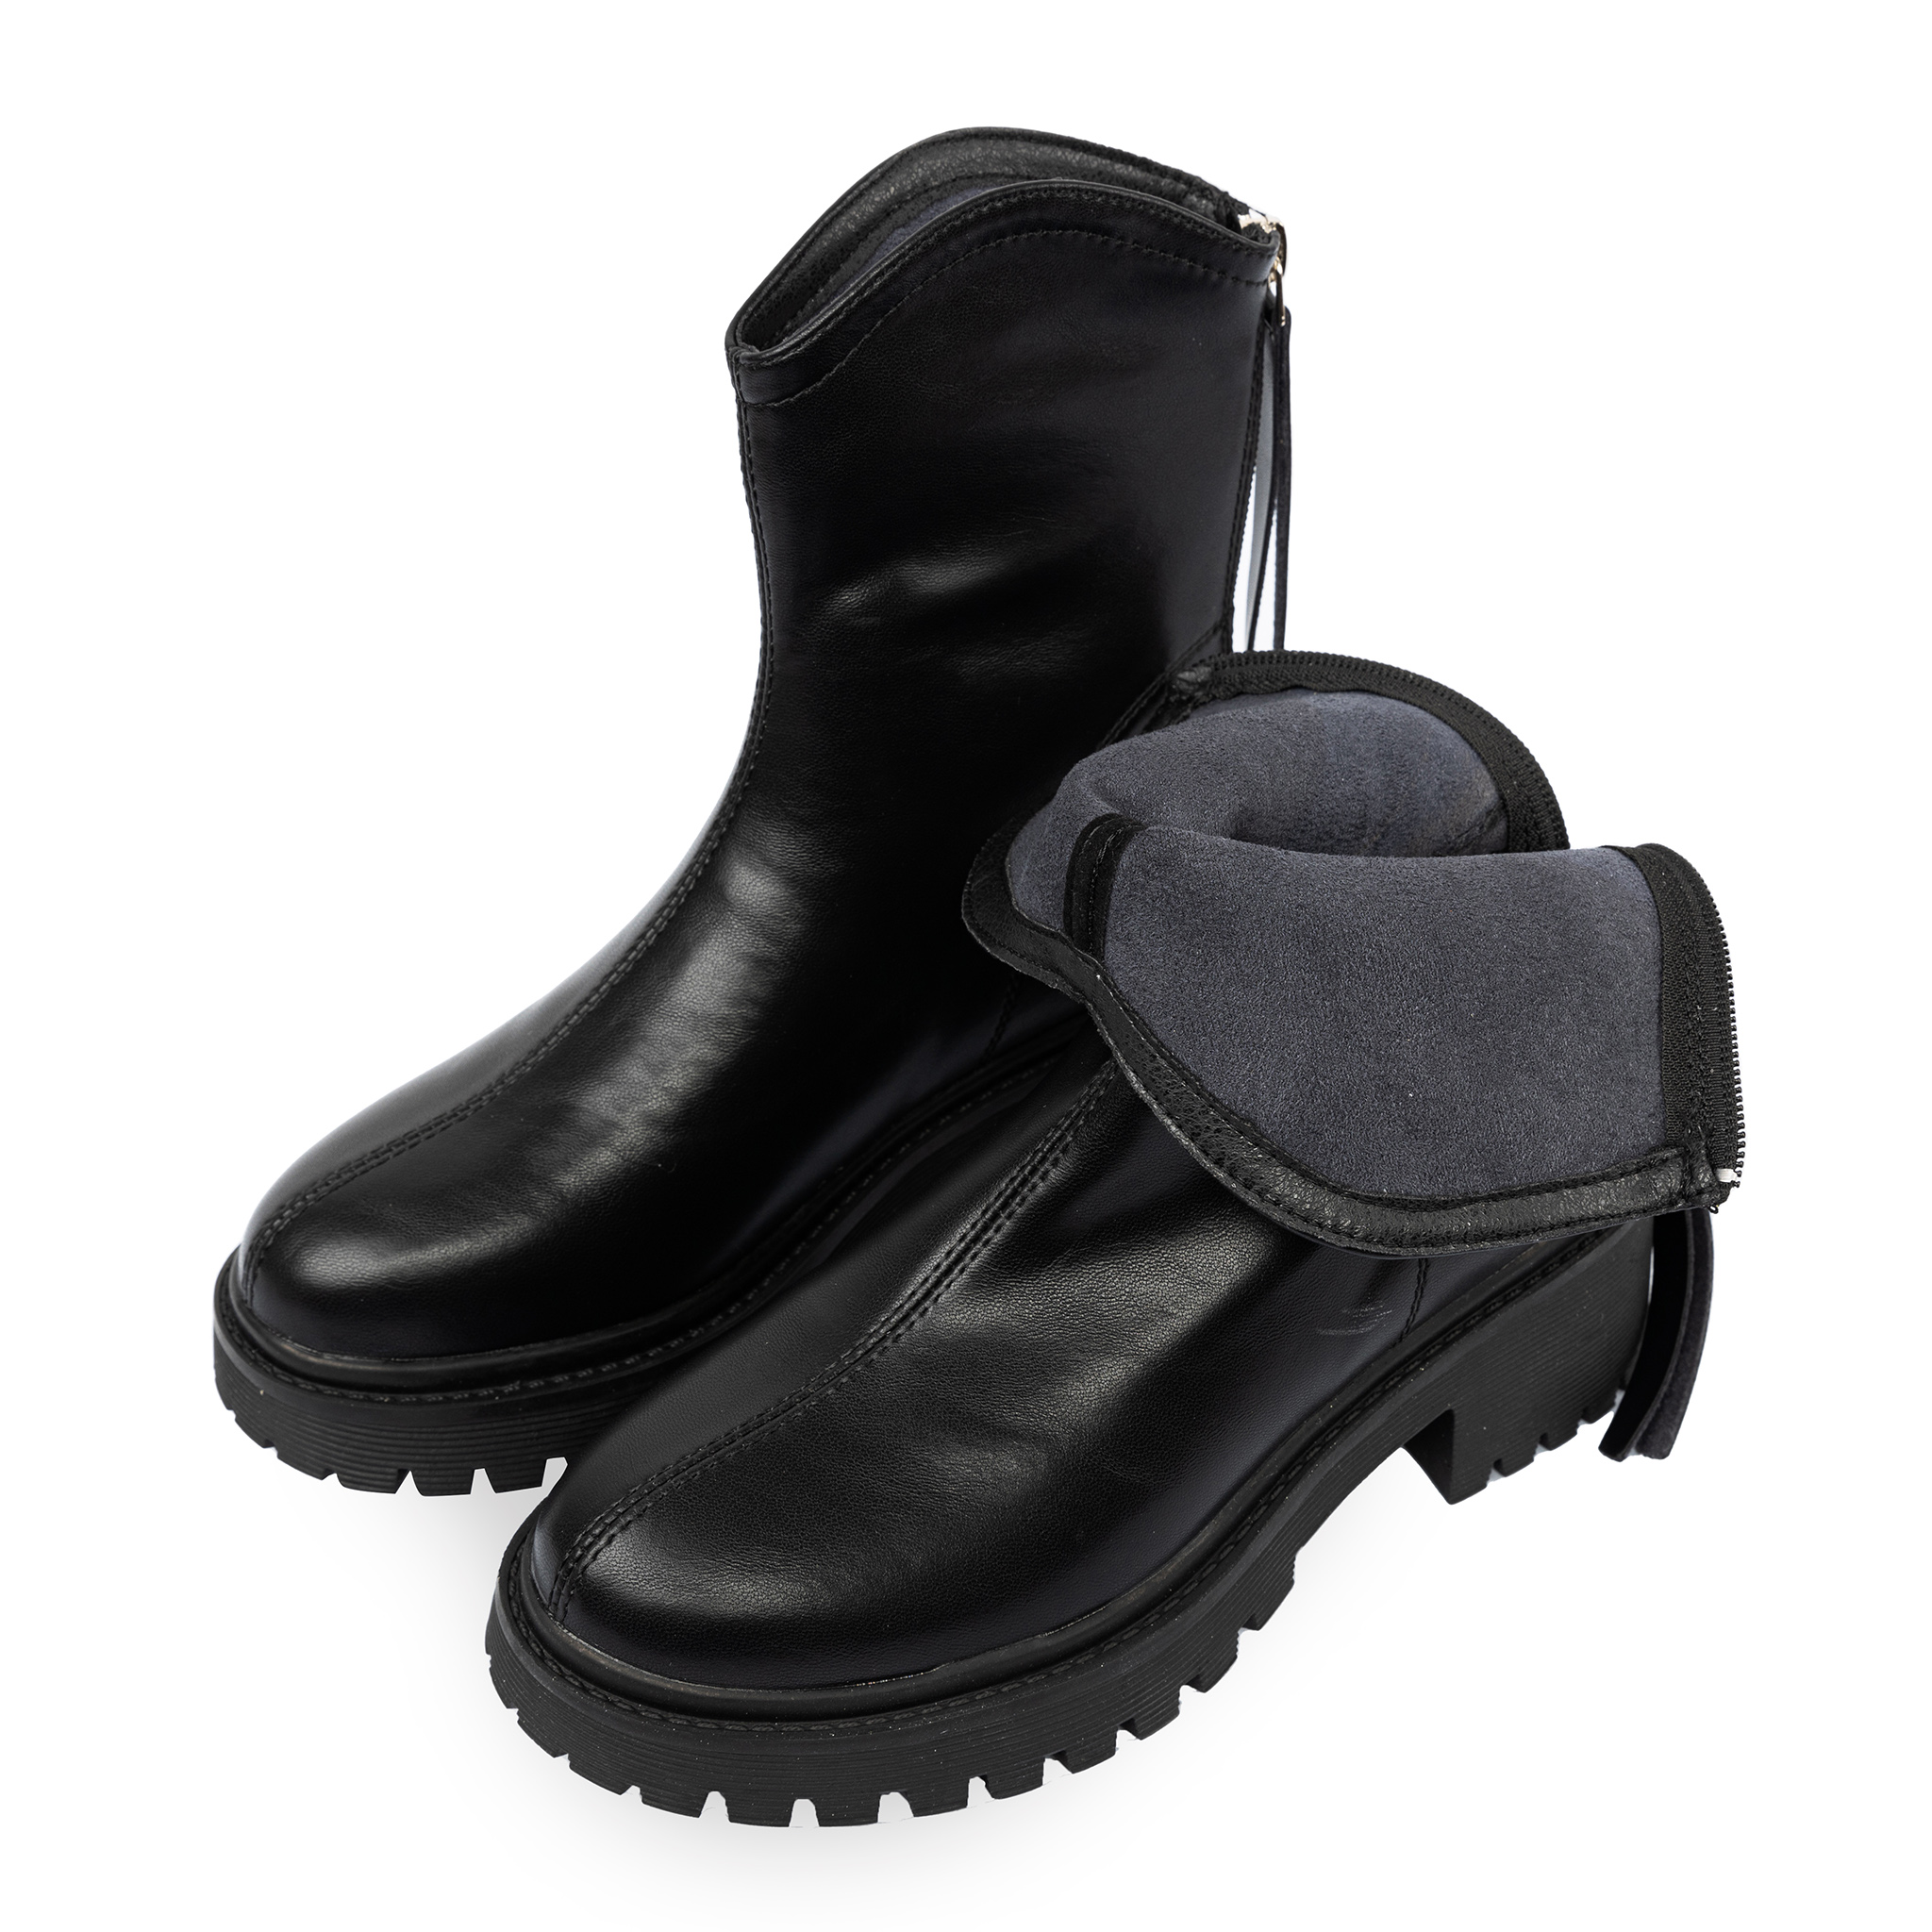 Giày Boots Nữ Da Mềm VEGAN 883 - Cỡ 38 - 24.0cm - Đen Microfiber